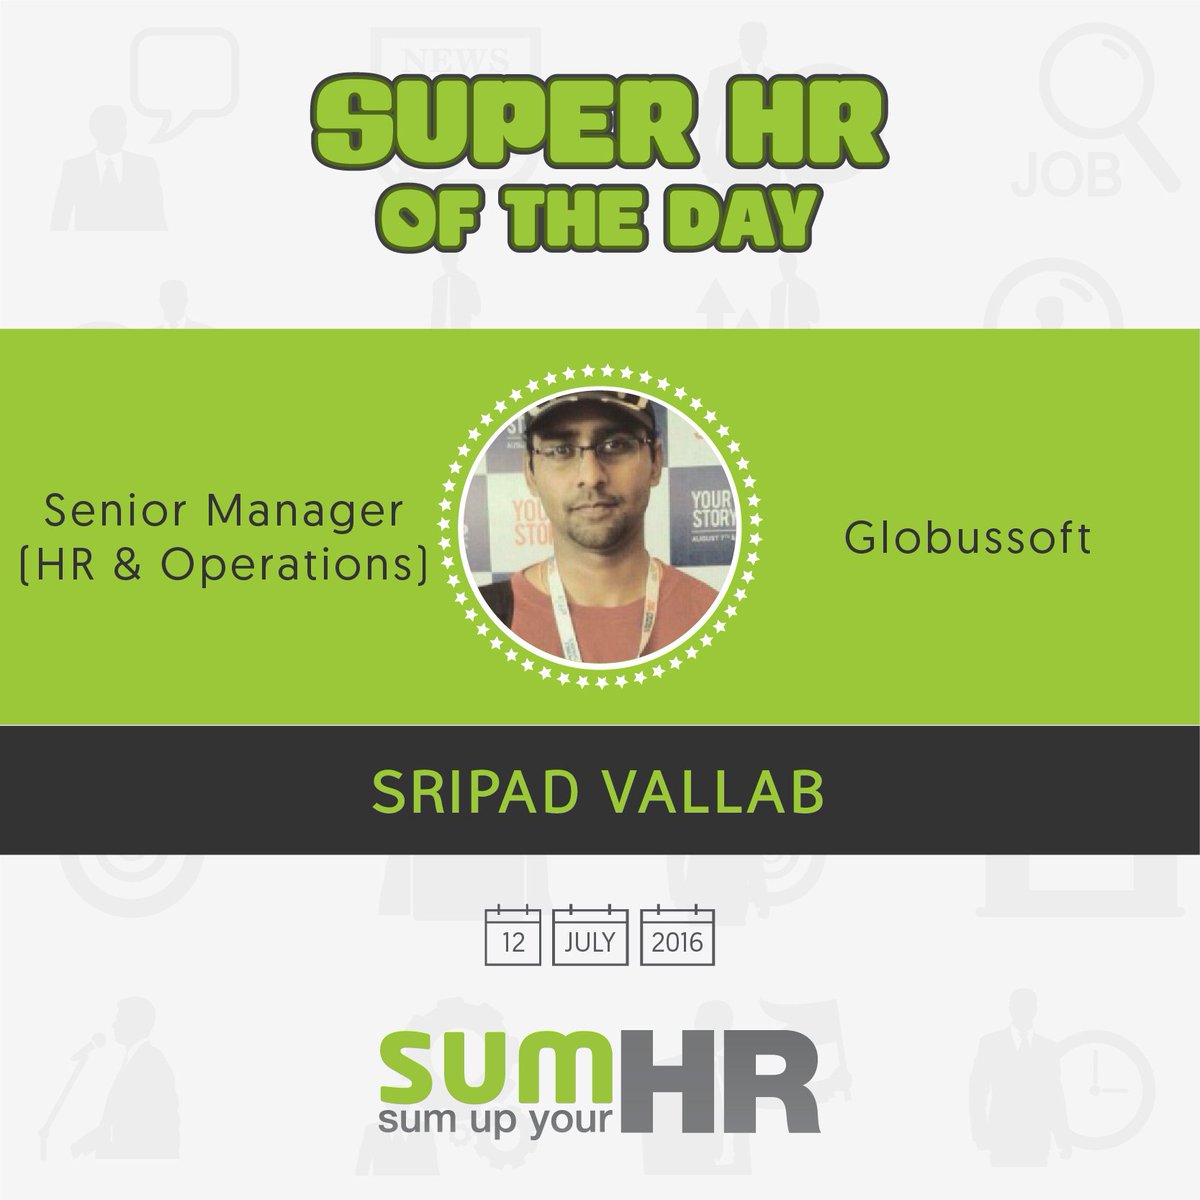 Congratulations Sripad Vallab #Globussoft #SuperHROfTheDay #HR #Recruitment #Management #SuperHR